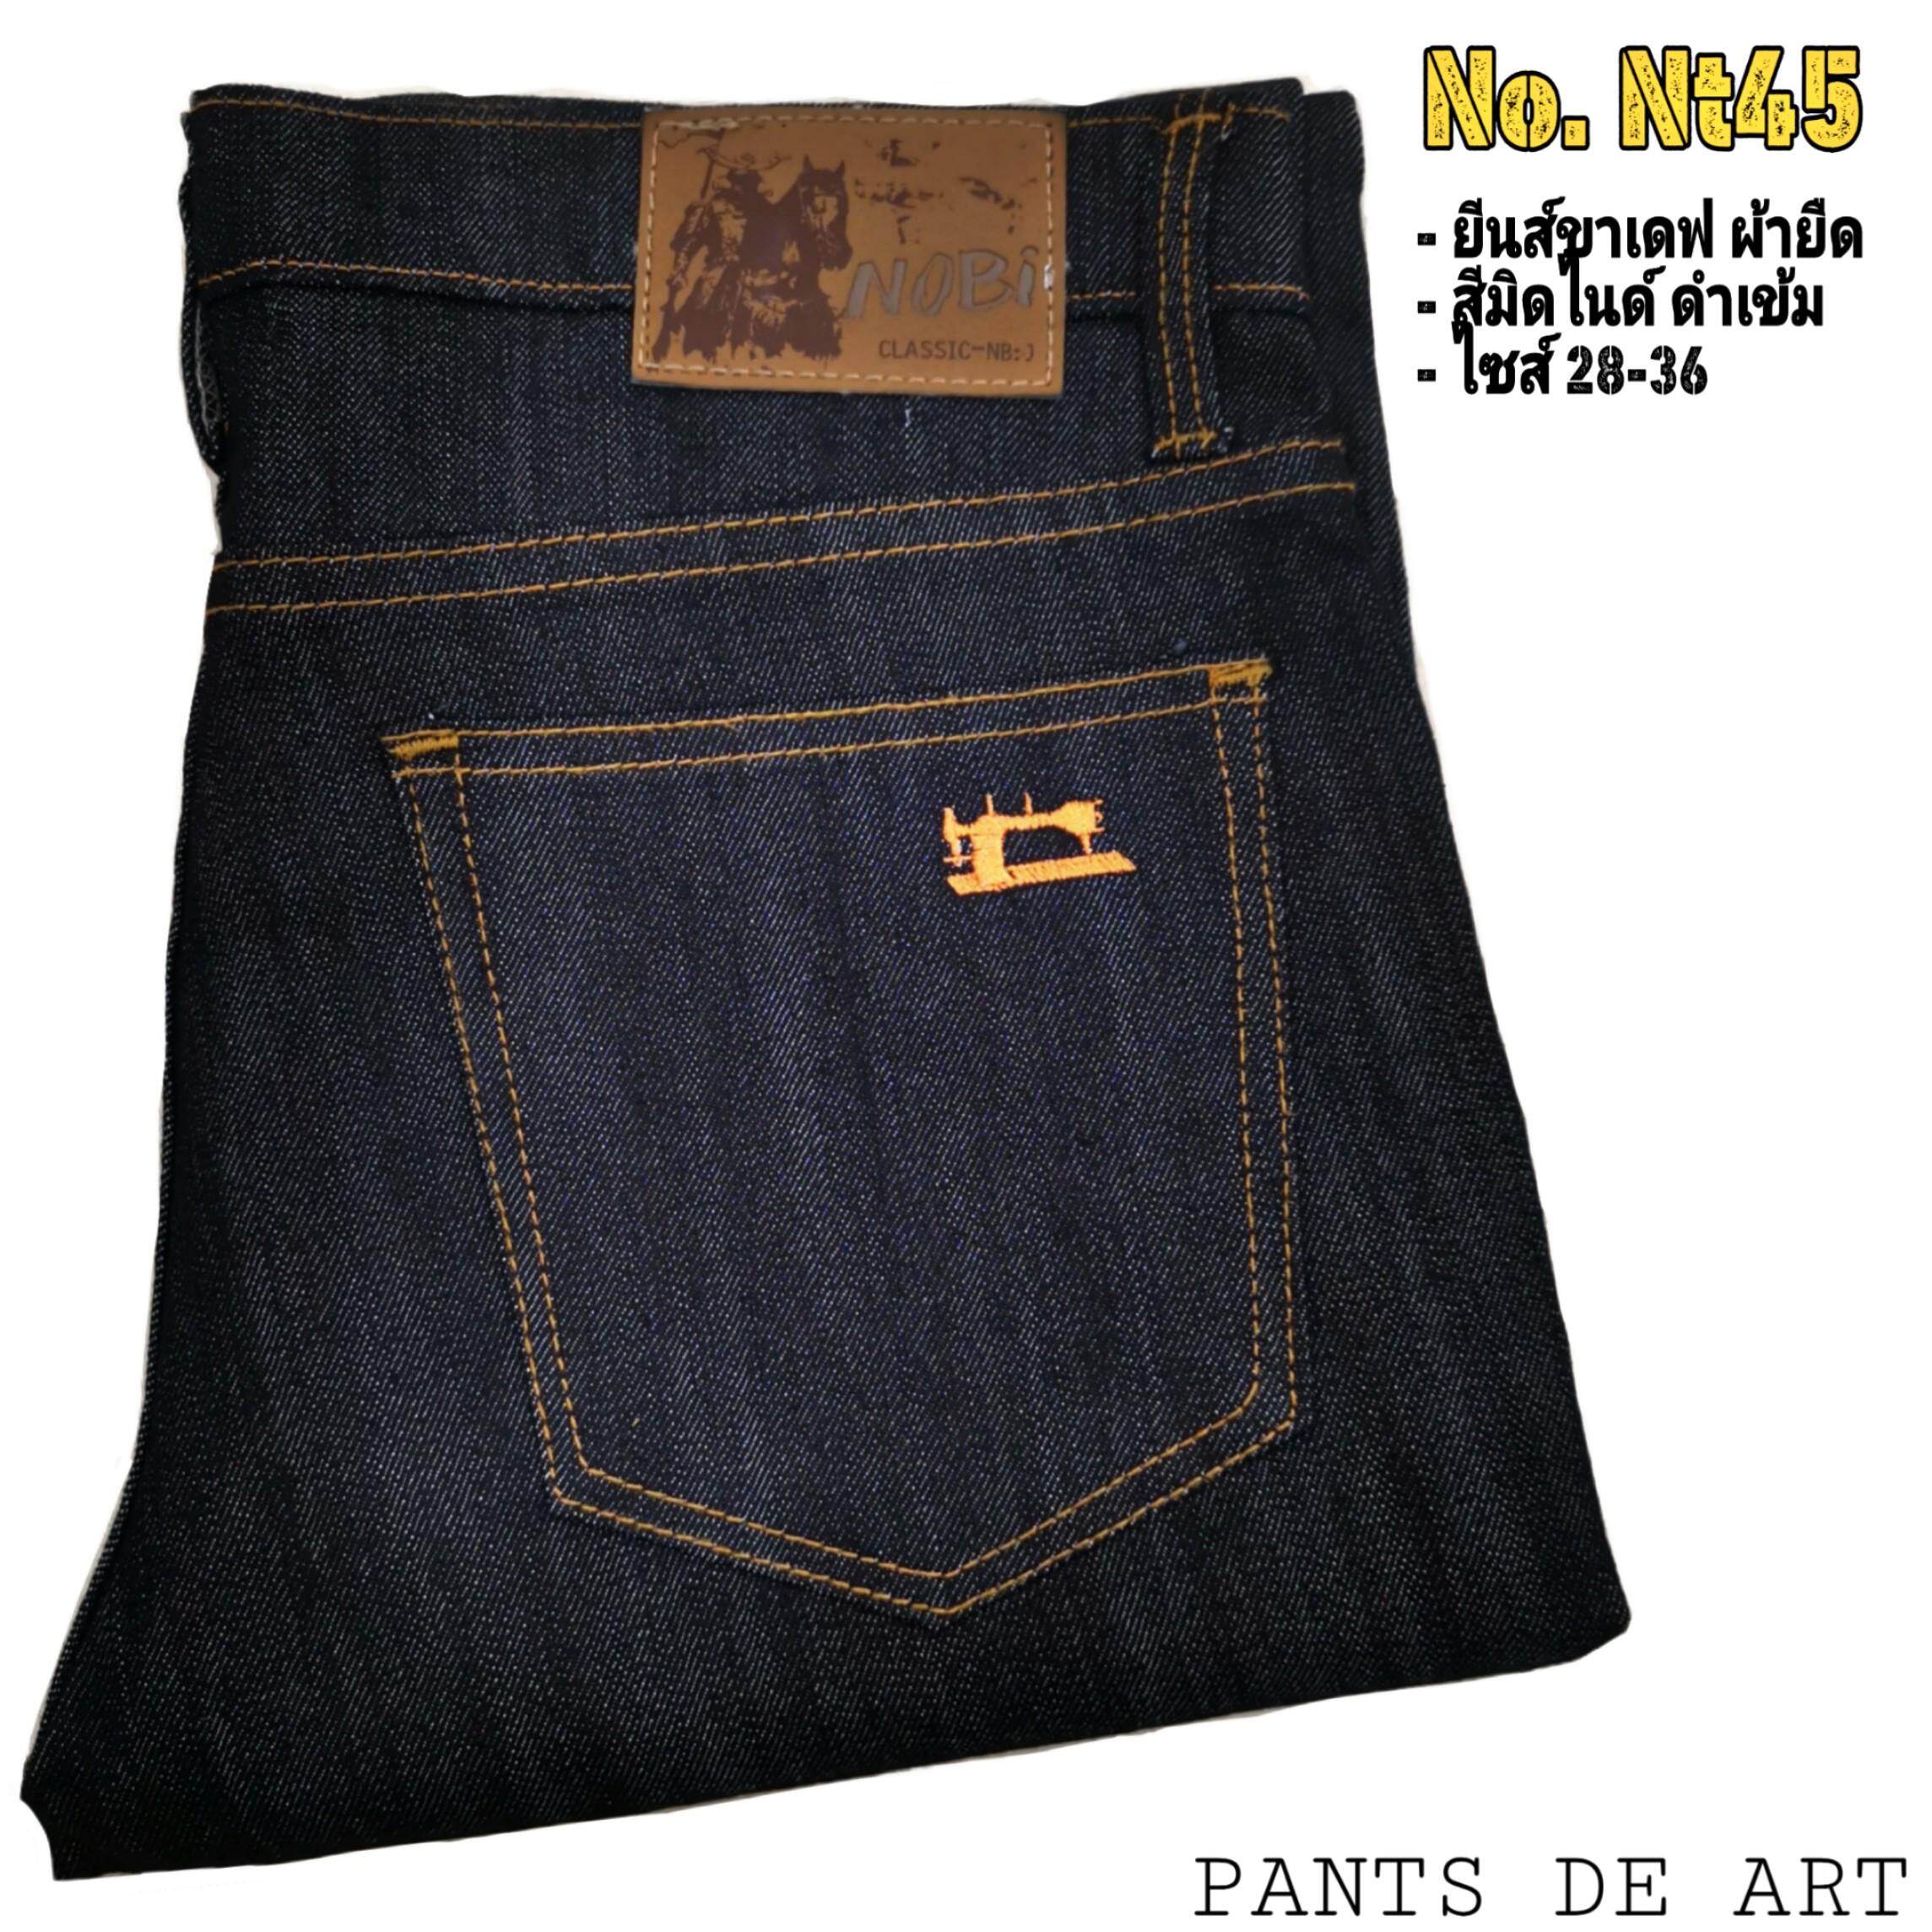 Pantsdeart Ll ยีนส์ชายผ้ายืด ขาเดฟ สีมิดไนด์(ดำเข้ม) งานปักคลาสสิค Size26-36. 